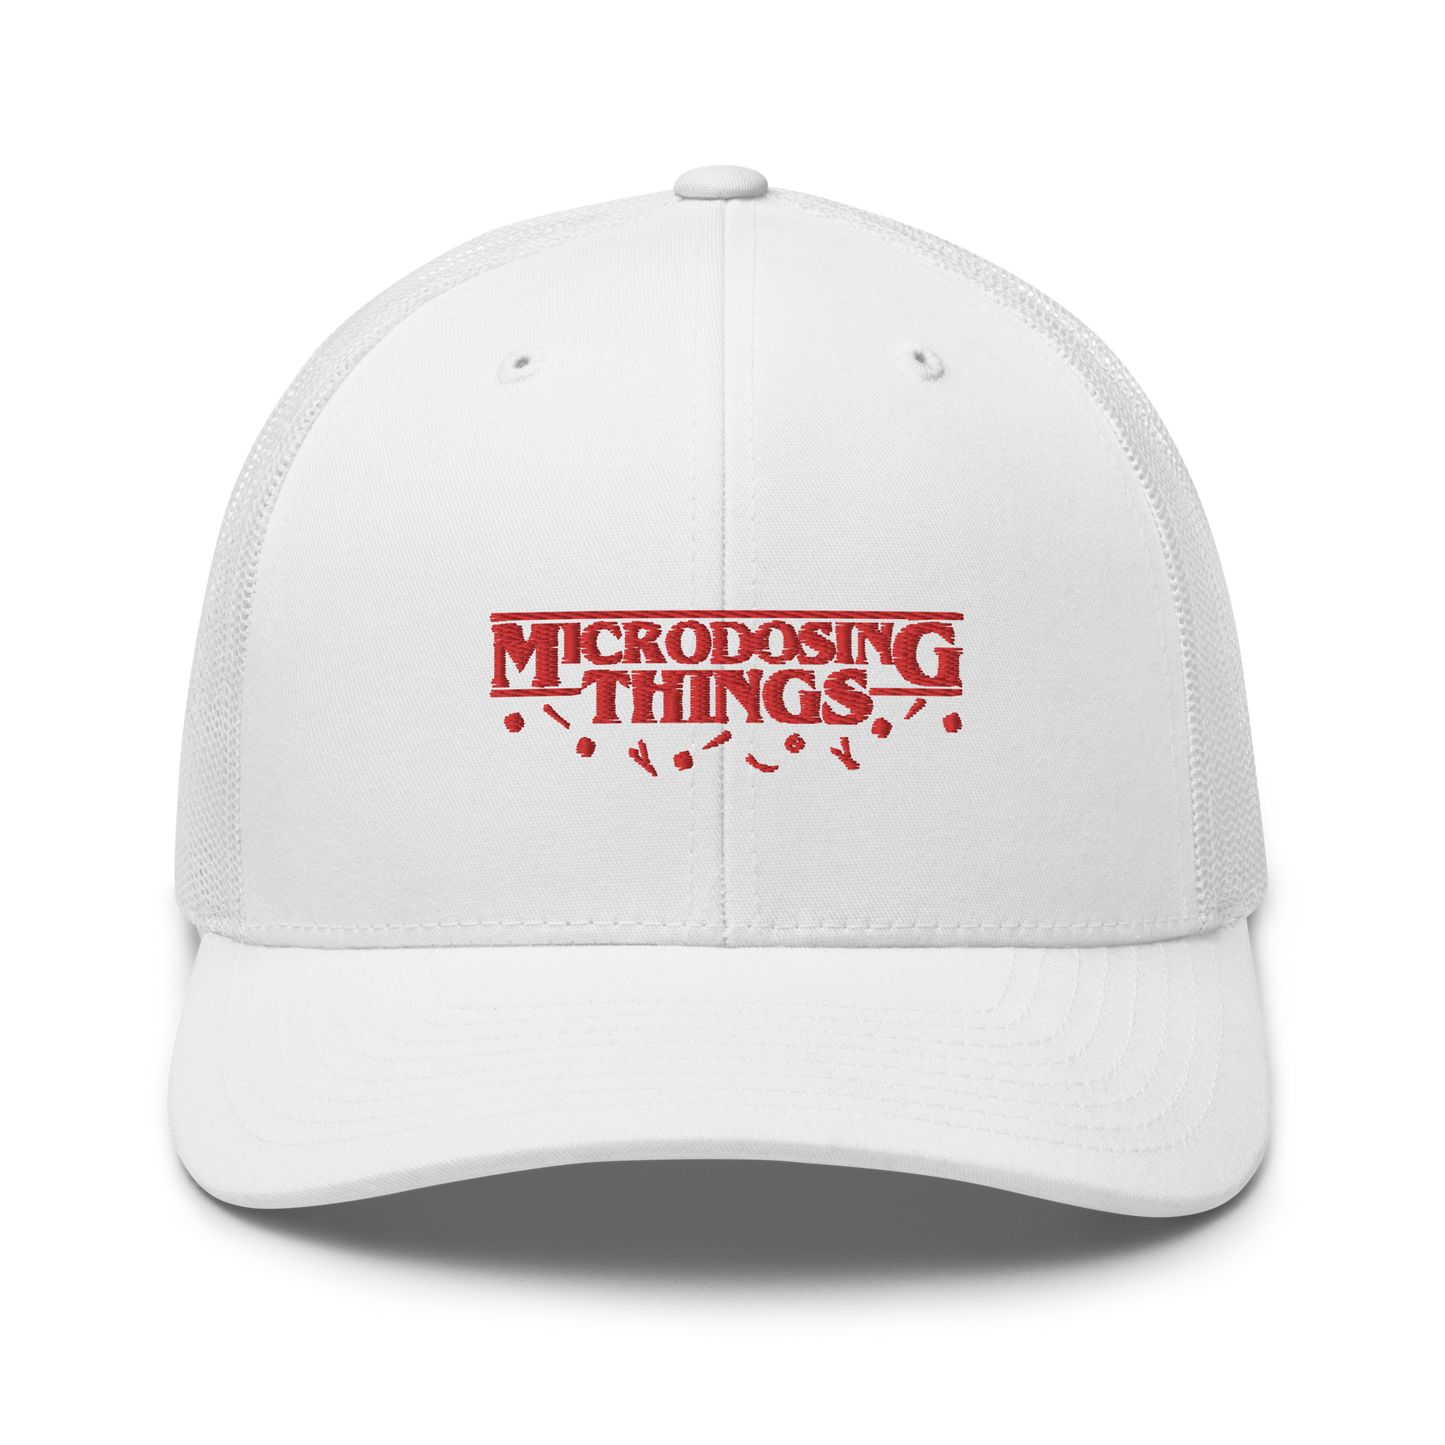 Microdosing Things Trucker Hat